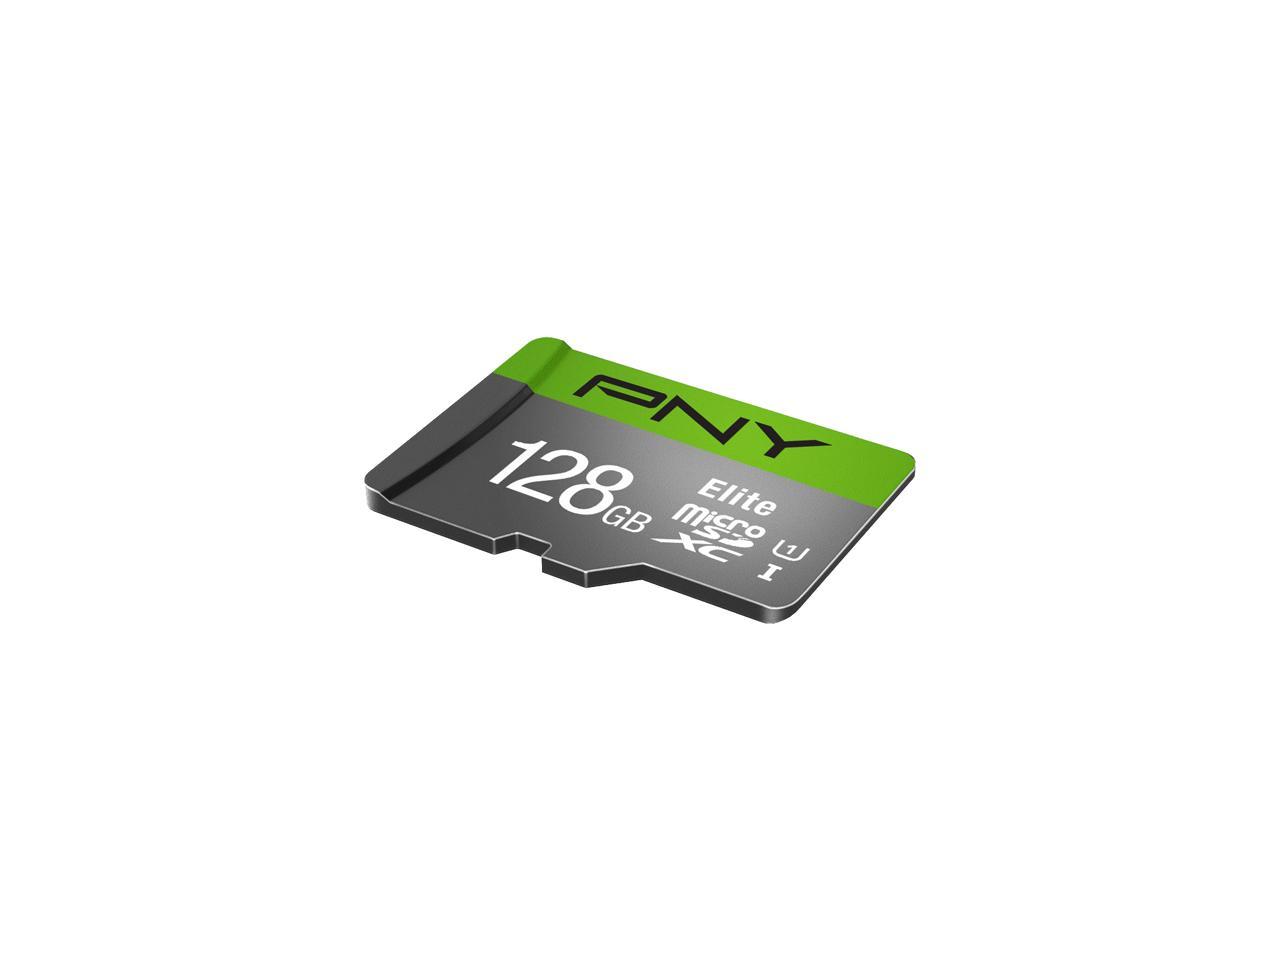 PNY 128GB Elite microSDXC UHS-I/U1 Class 10 Memory Card with Adapter, Speed Up to 85MB/s (P-SDU128U185EL-GE)